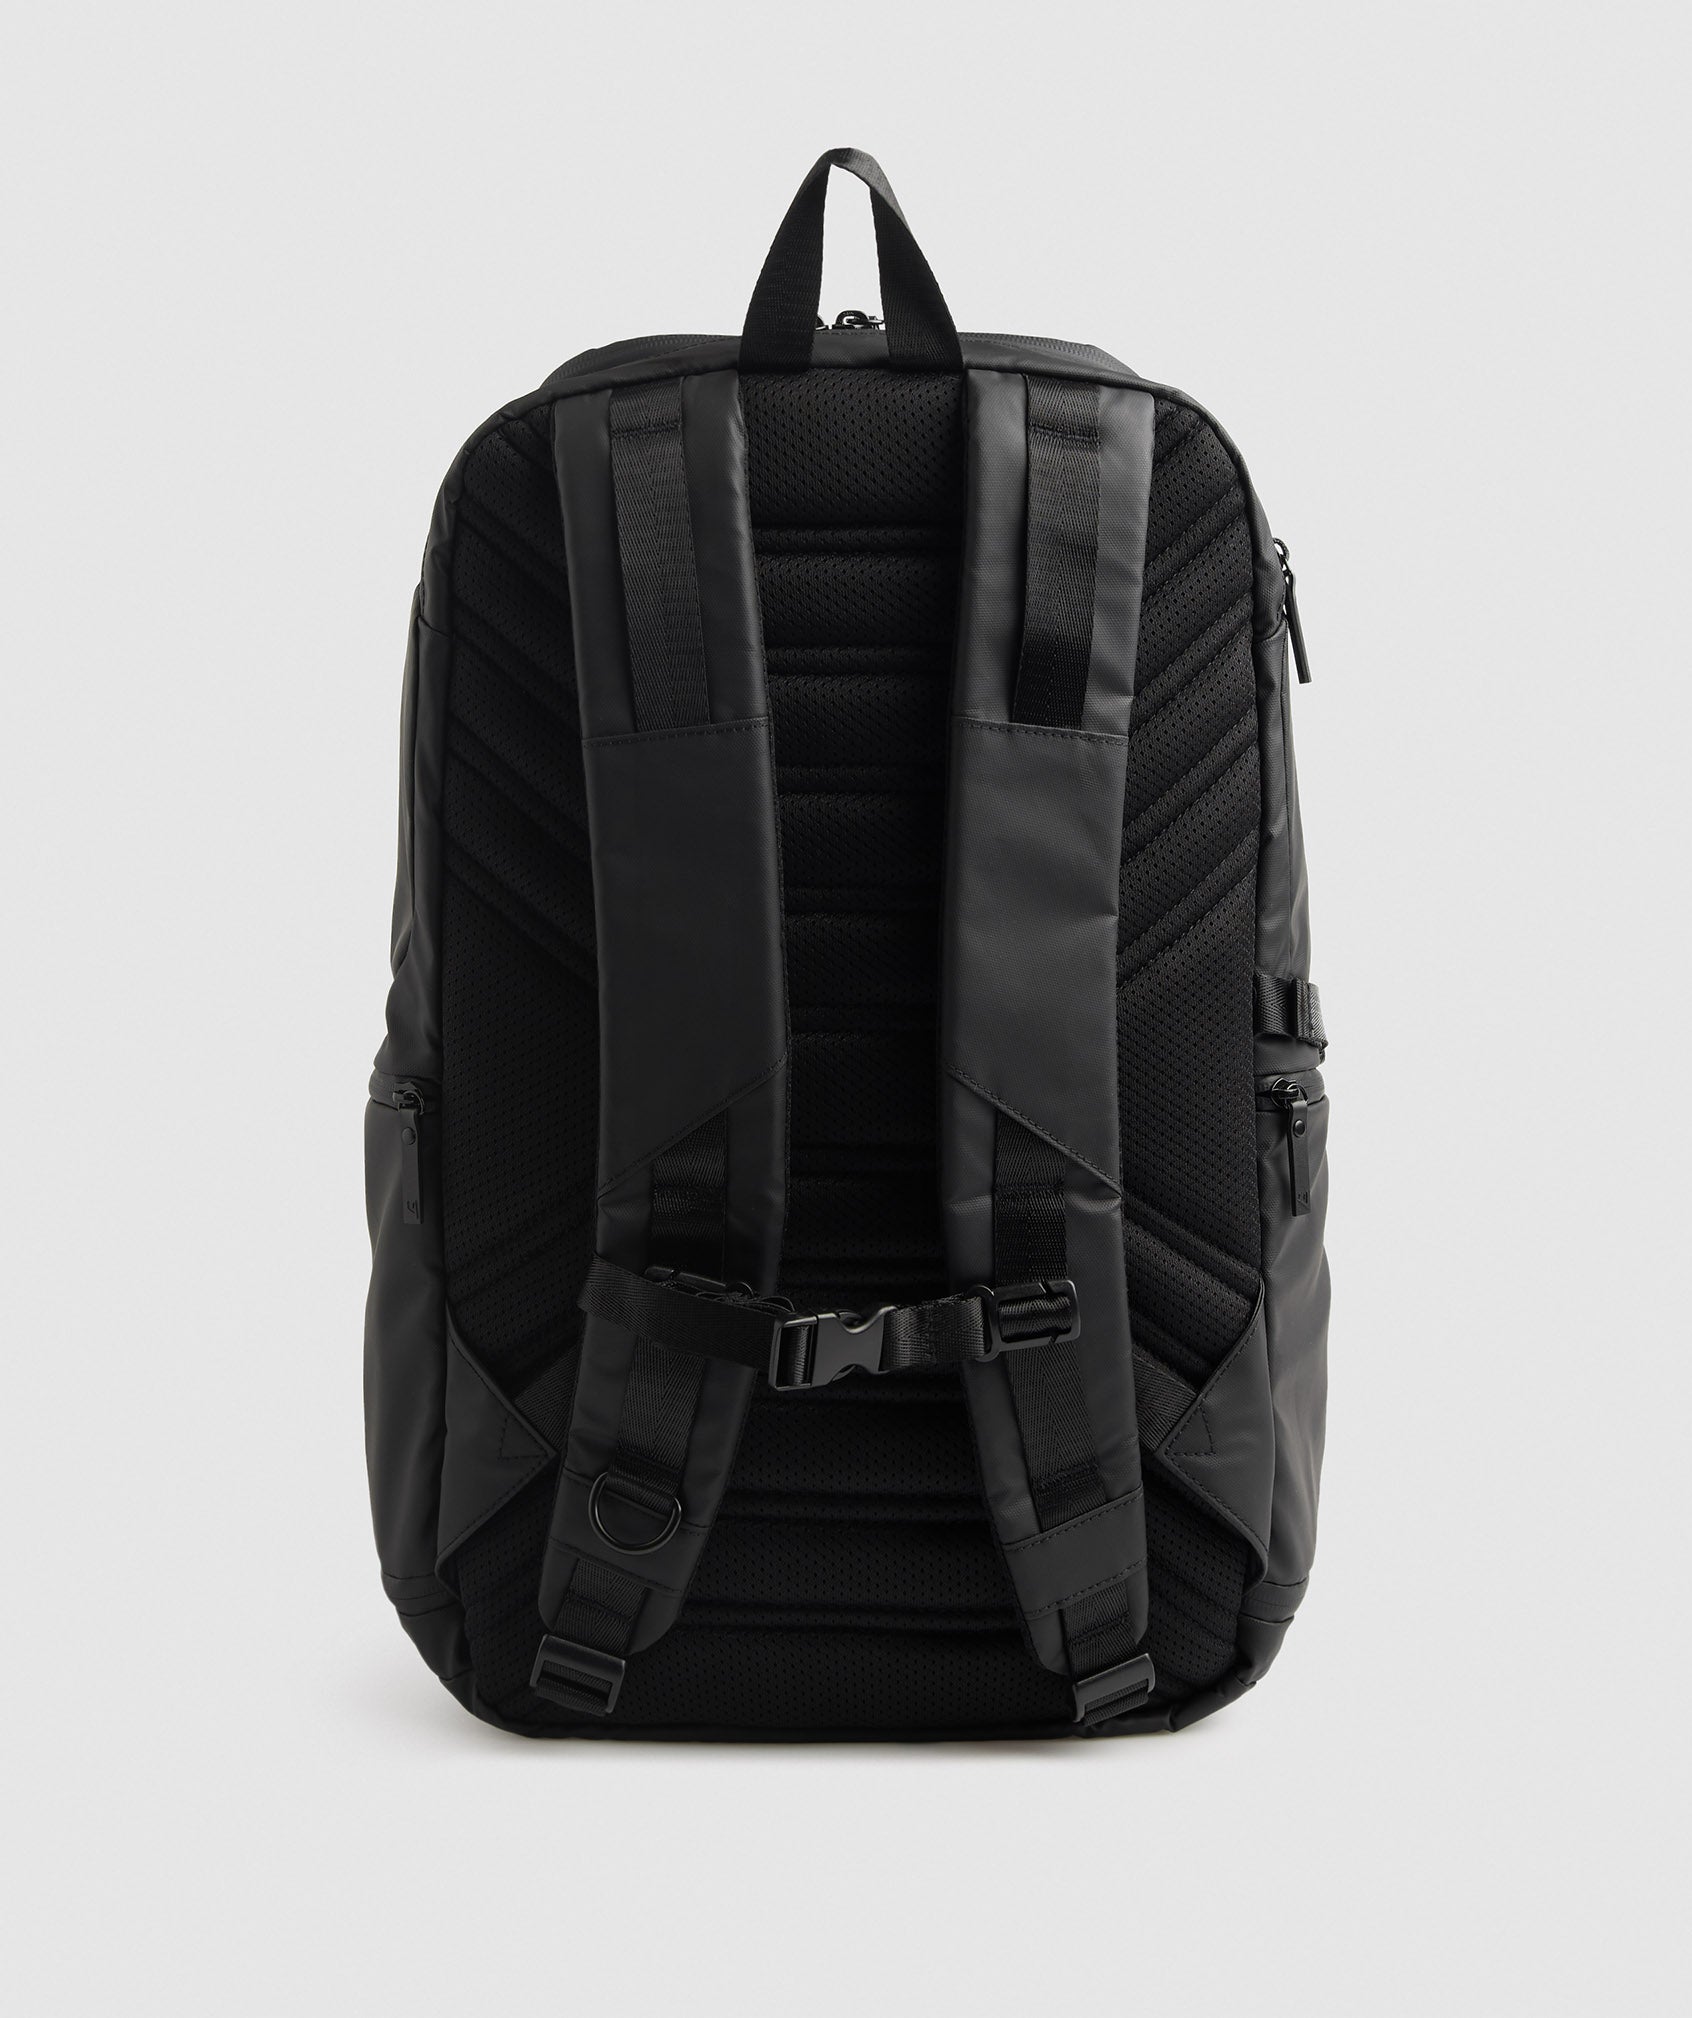 X-Series Bag 0.3 in Black - view 6